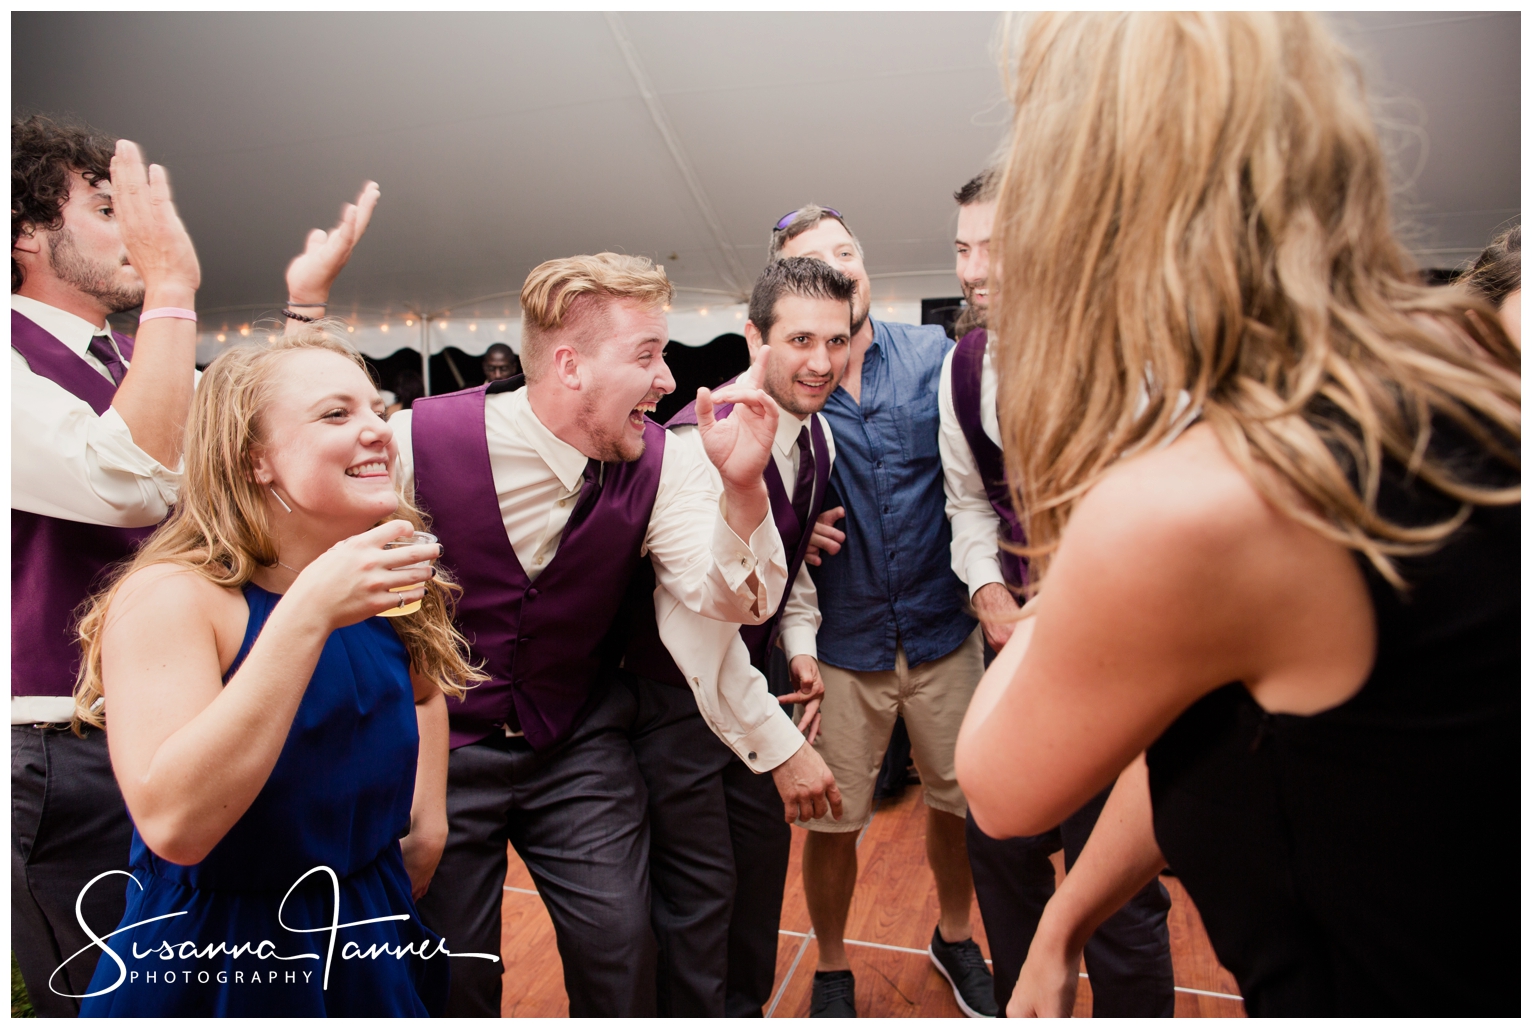 Indianapolis Outdoor Wedding, wedding guests smiling and having fun on dance floor